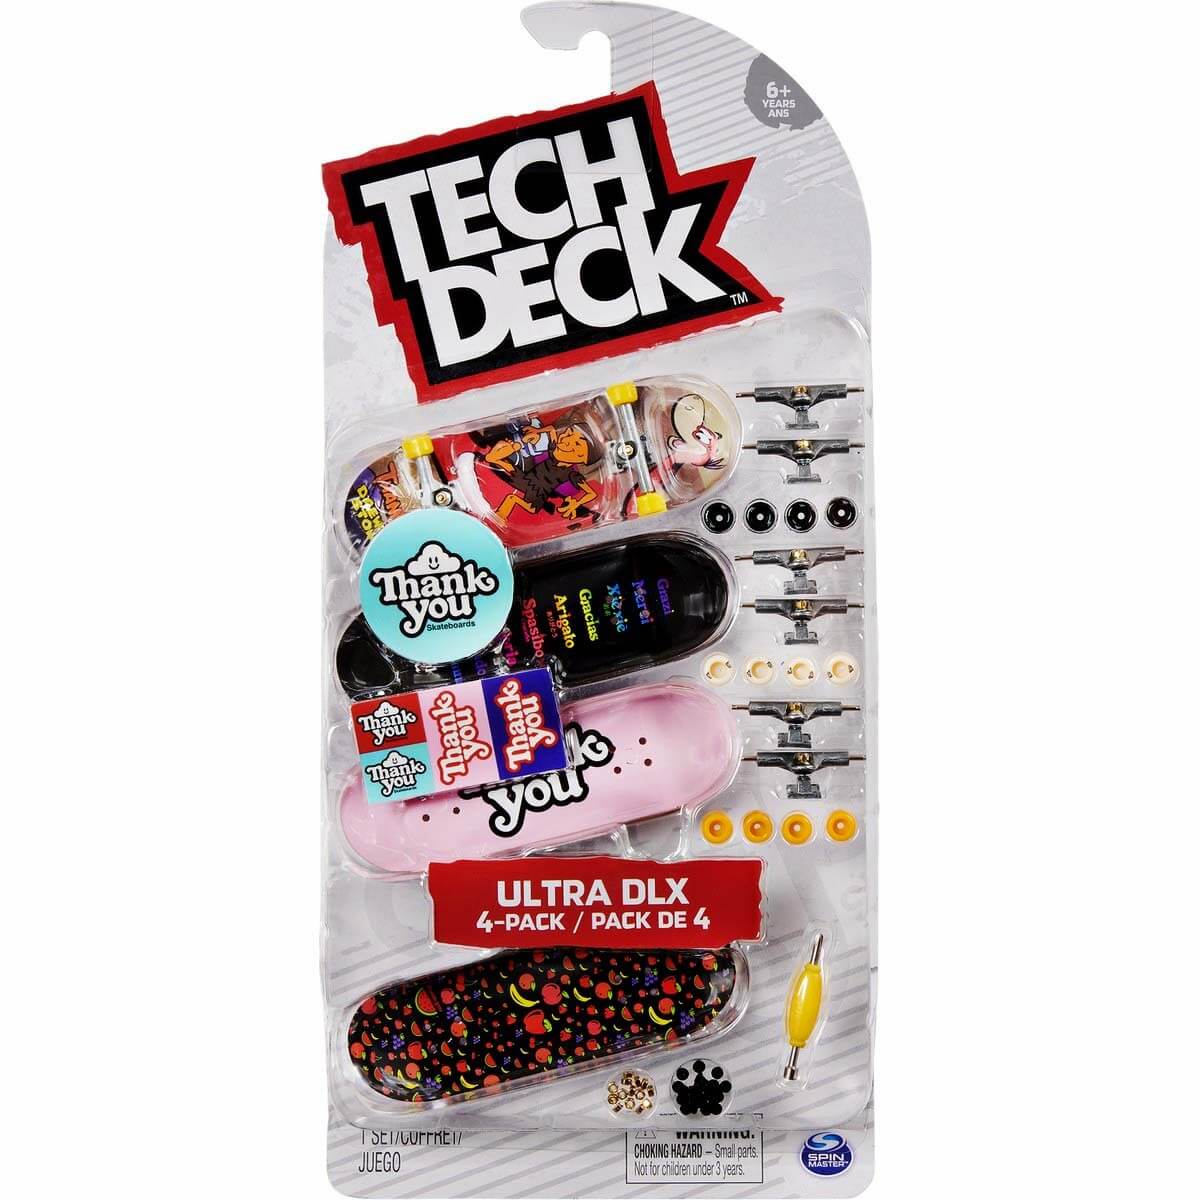 Tech Deck Ultra DLX 4-Pack Thank you Fingerboard